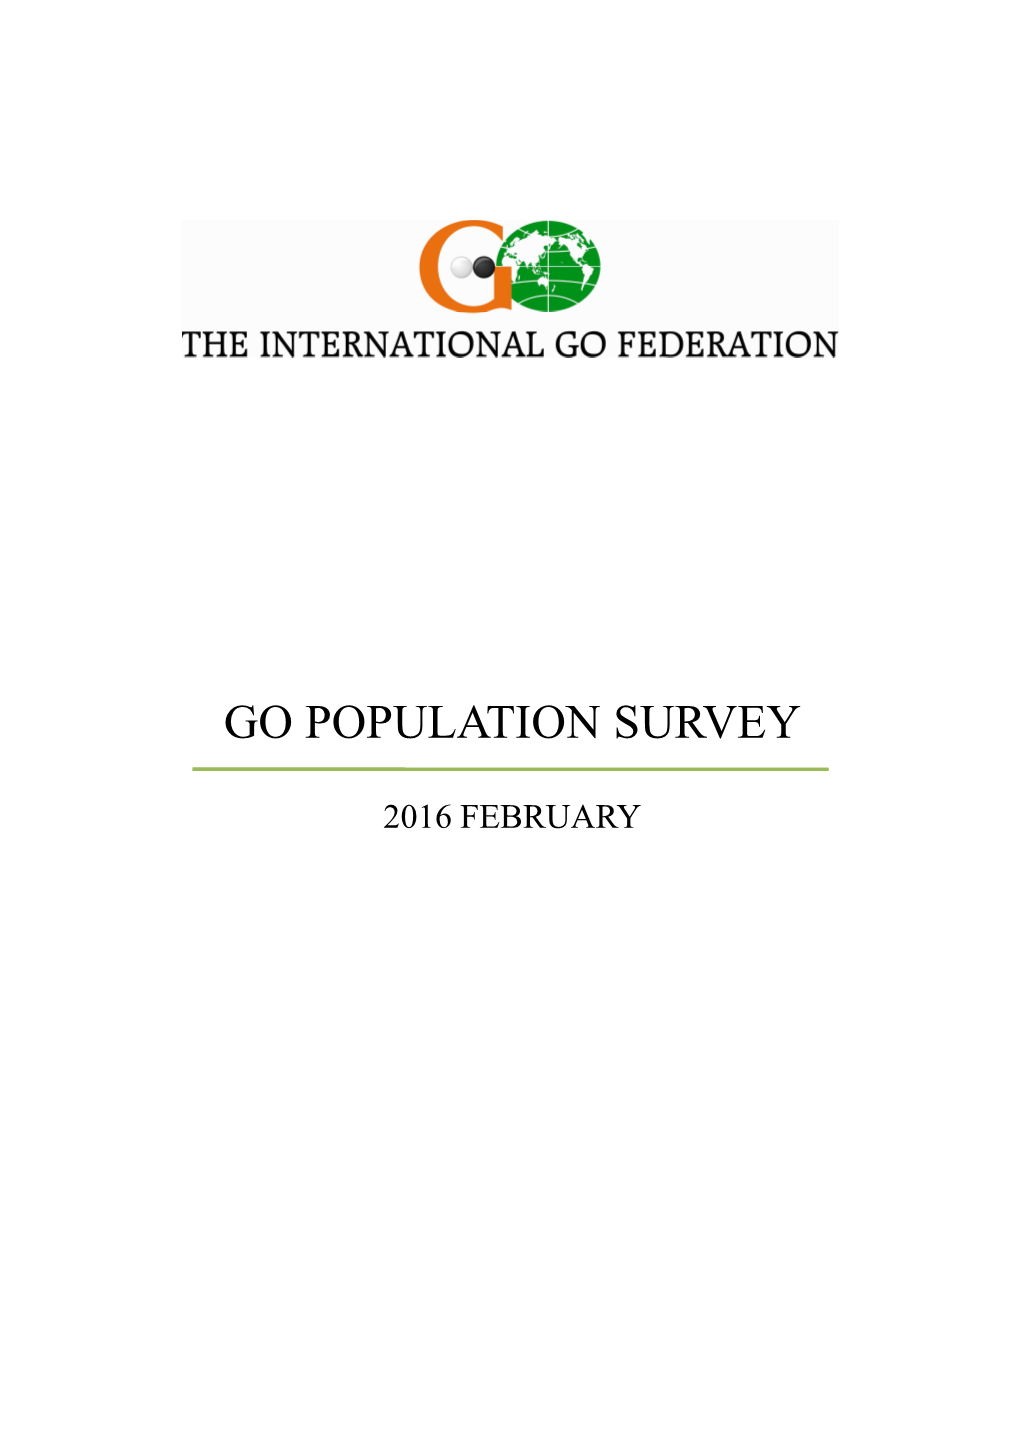 Go Population Survey